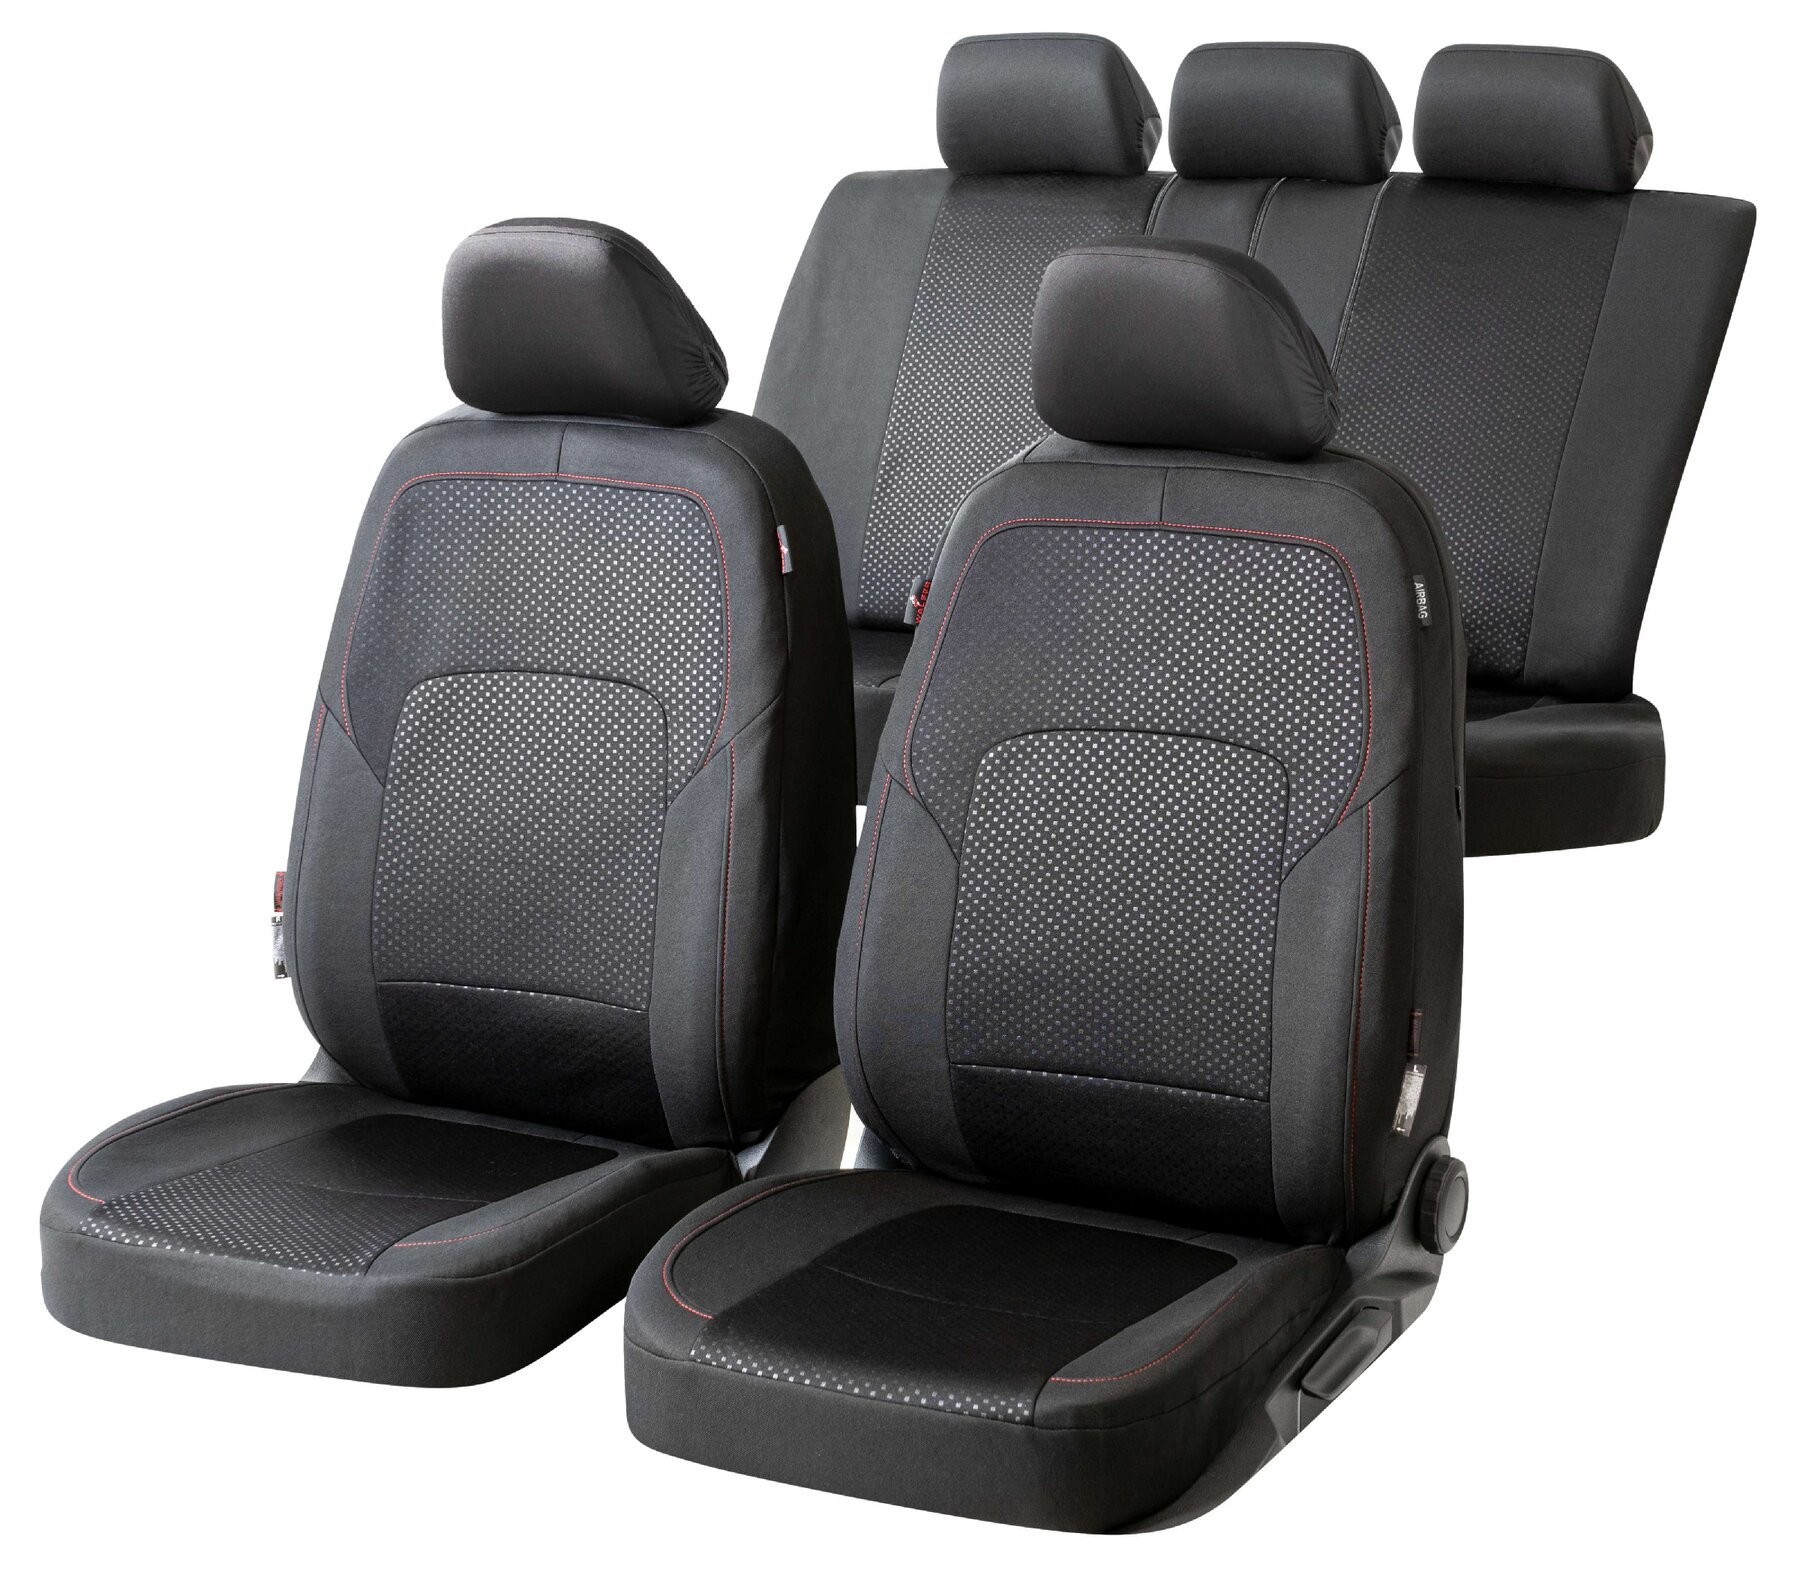 ZIPP IT Premium Car seat covers Logan complete set with zip-system black/red